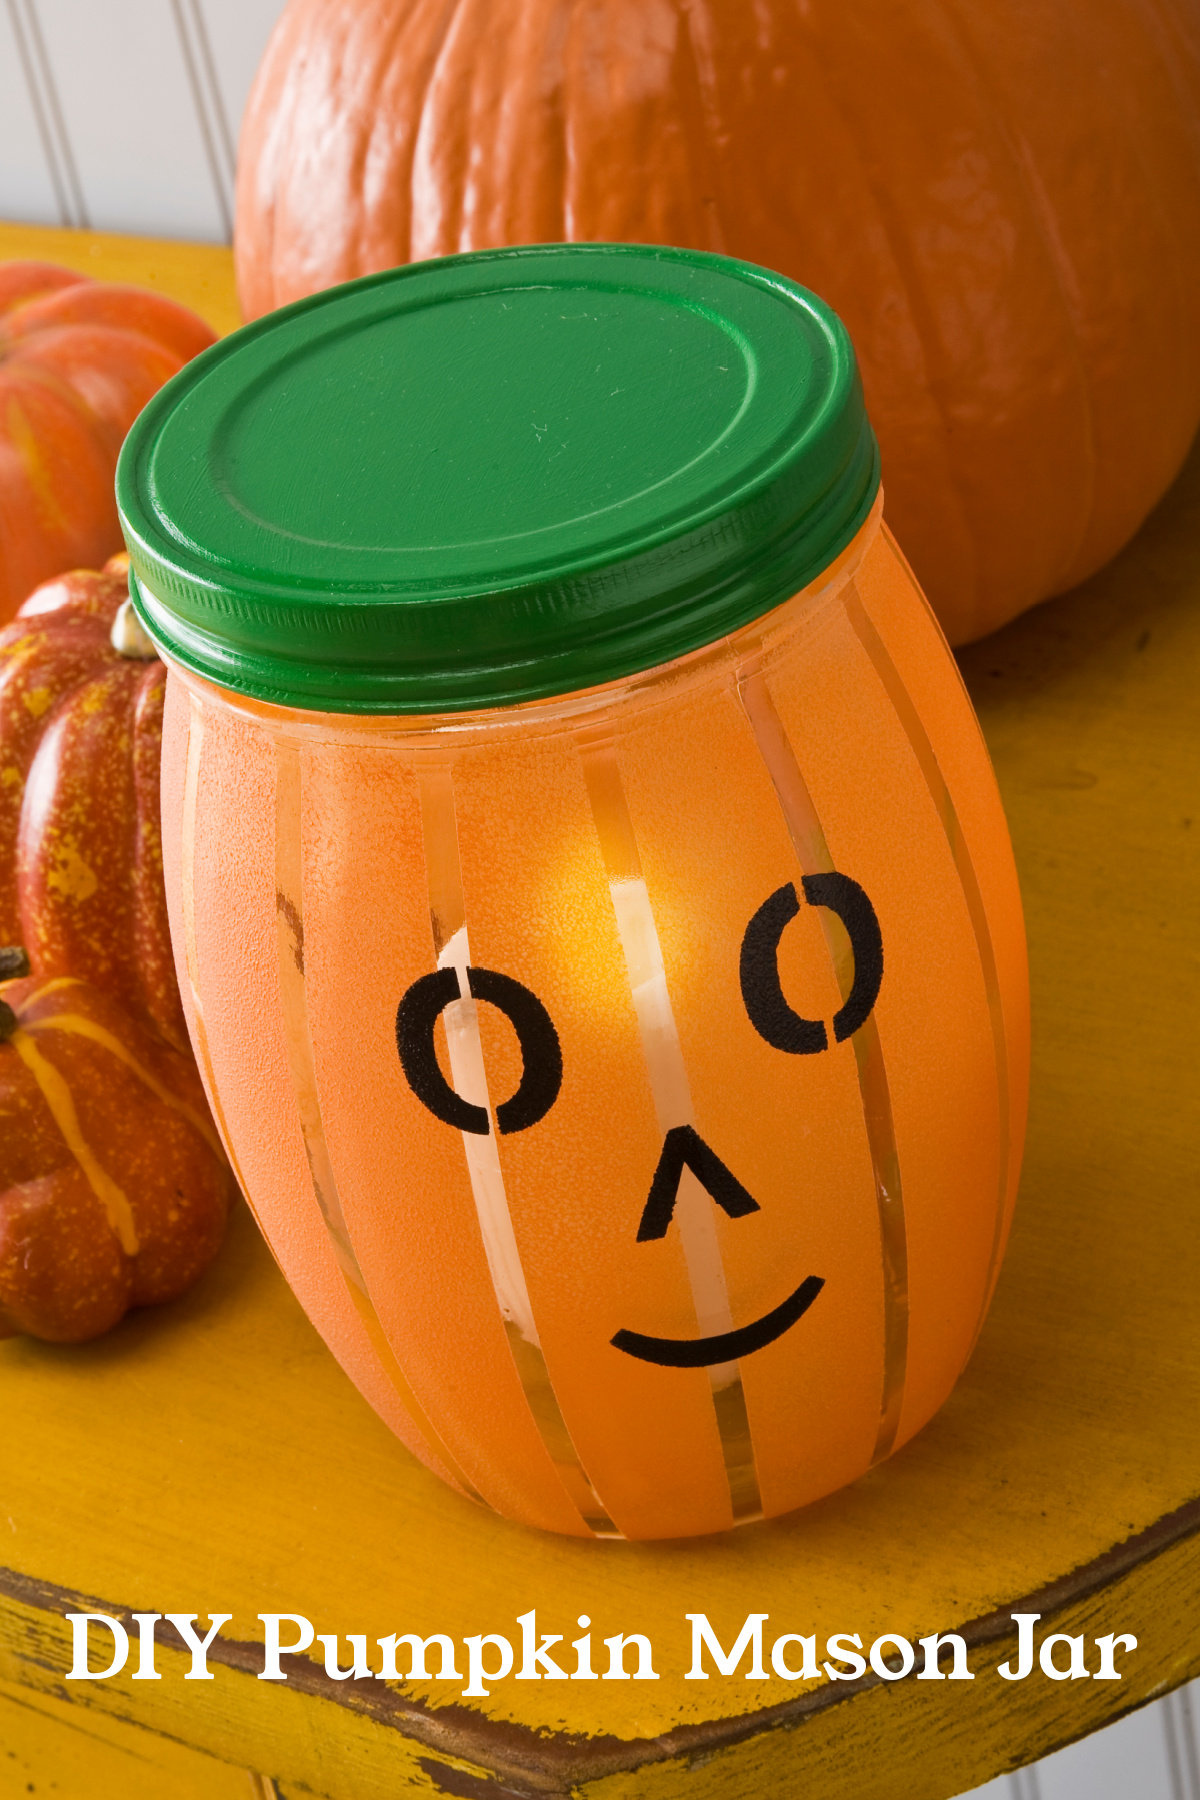 Pumpkin Mason Jar That Looks Like a Jack O' Lantern